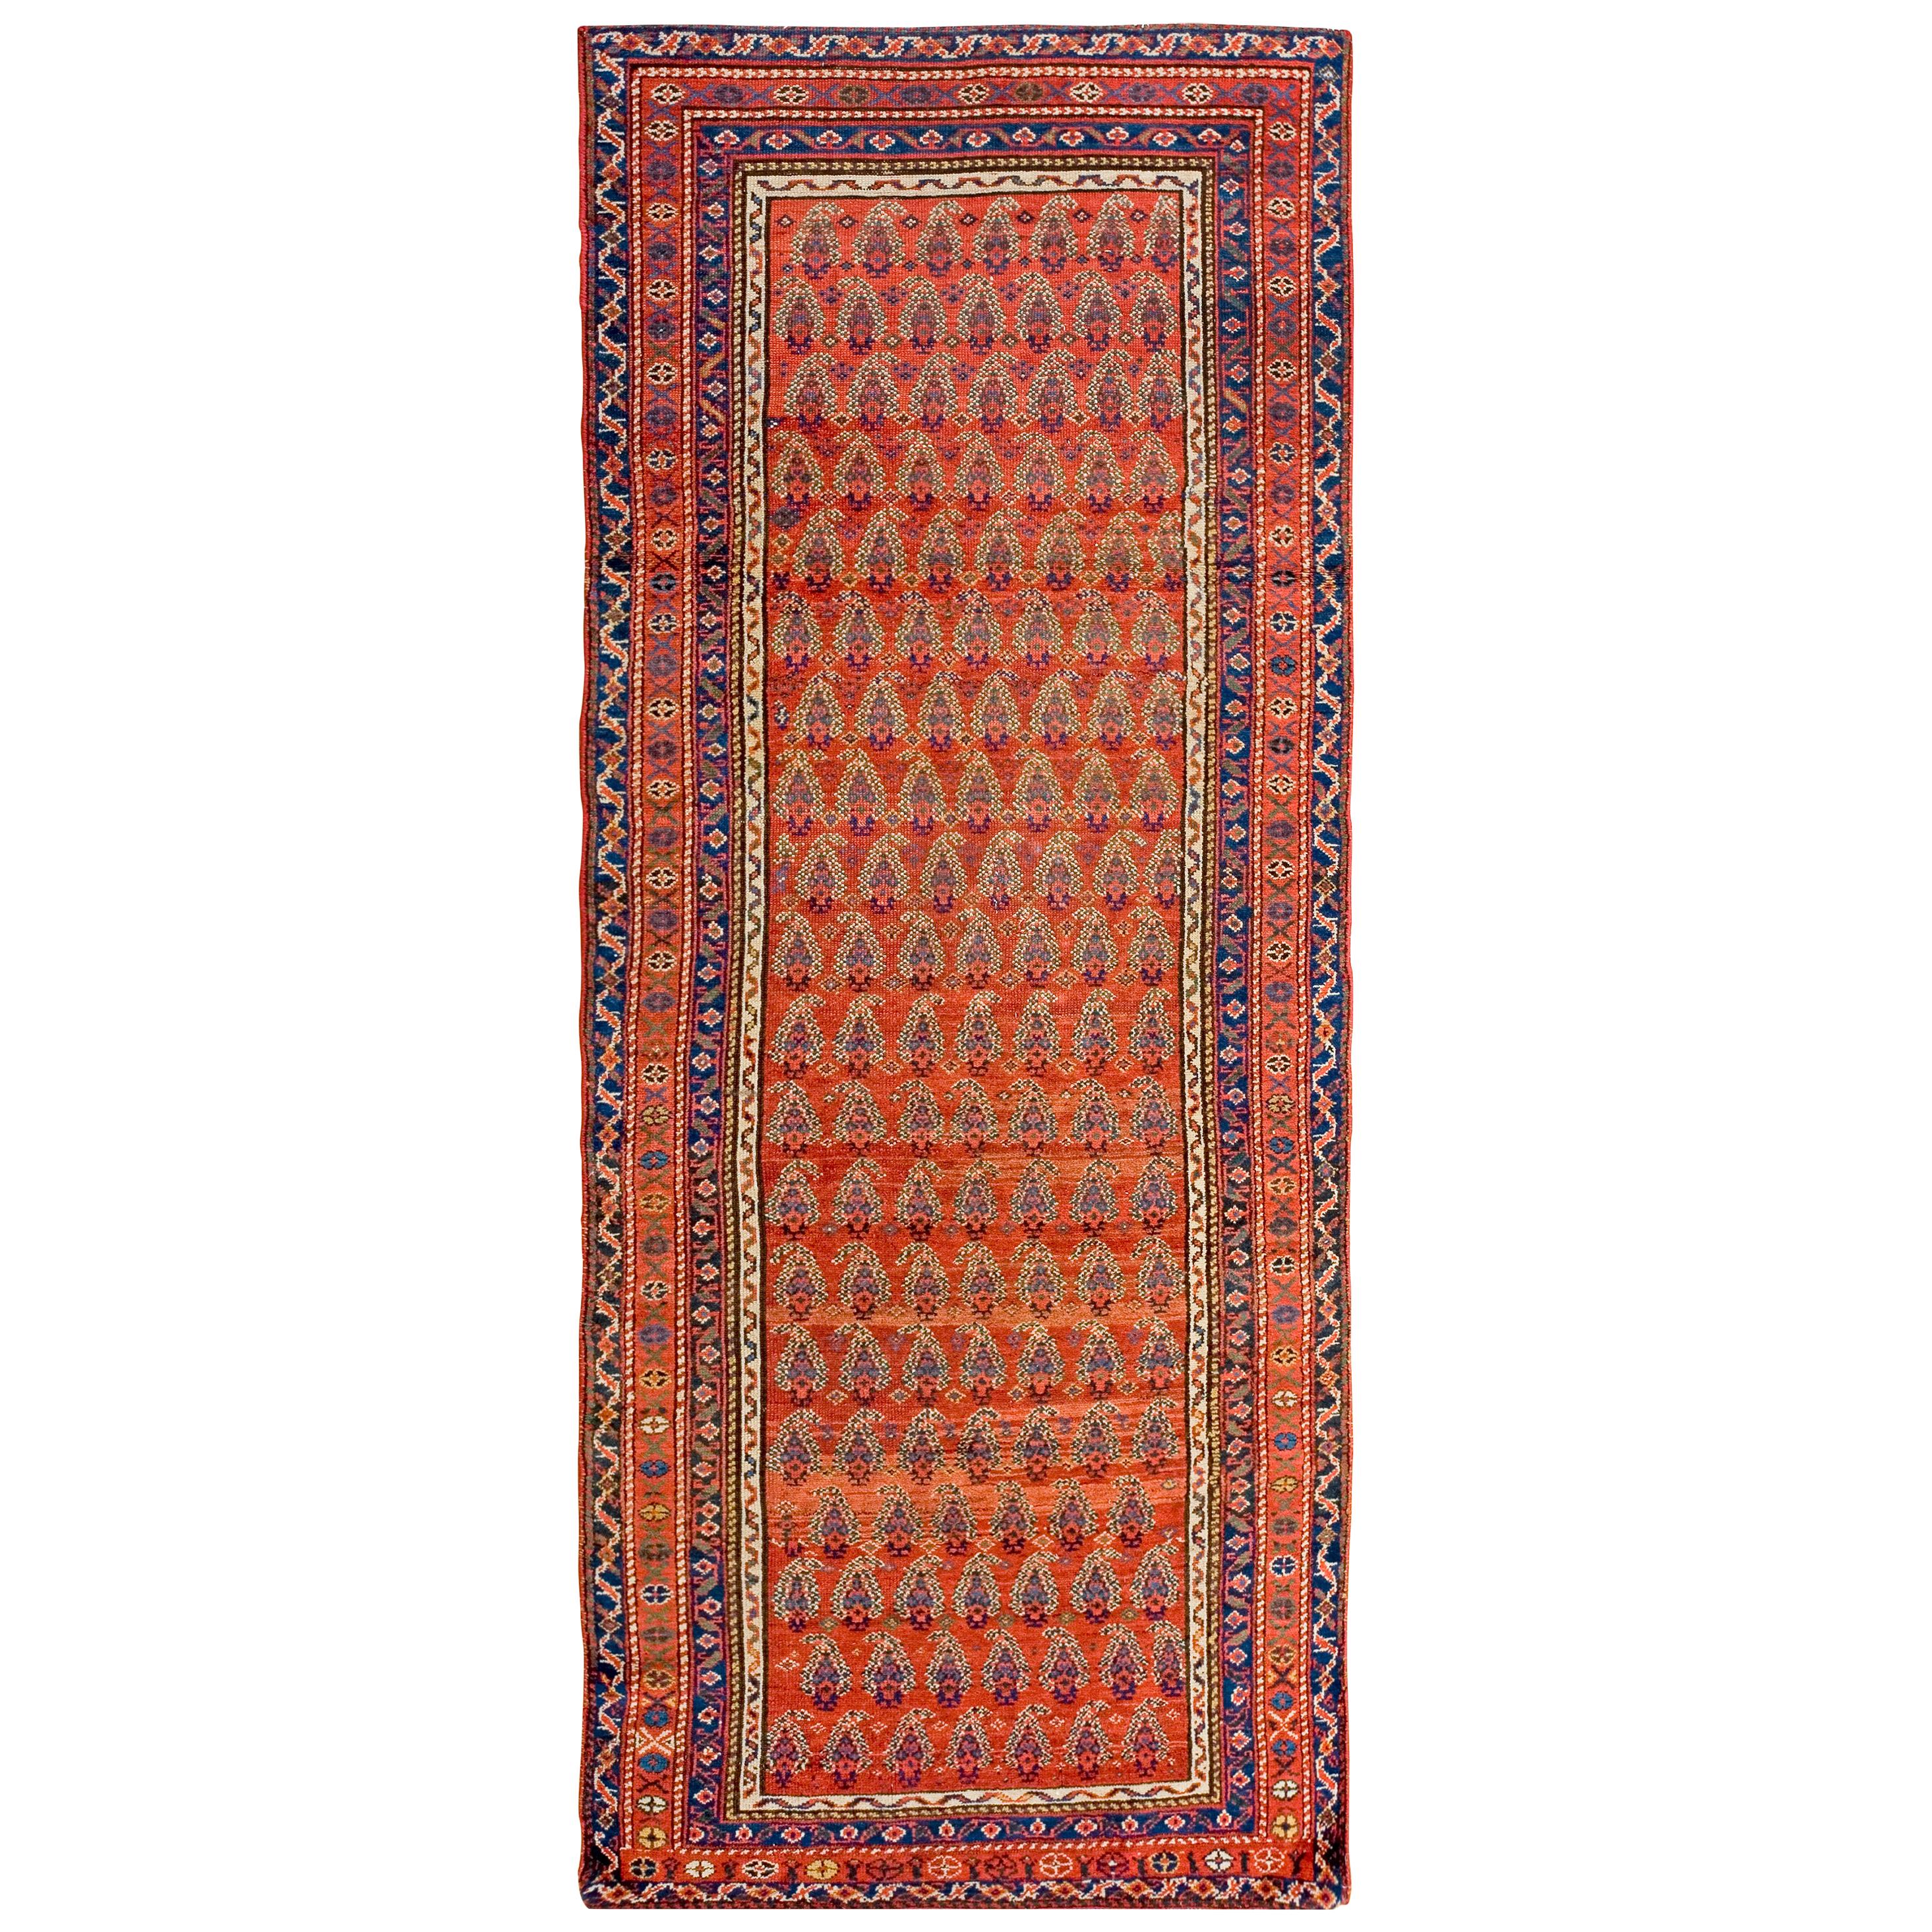 Early 20th Century Kurdish Carpet ( 3'5" x 8'8" - 104 x 265 )